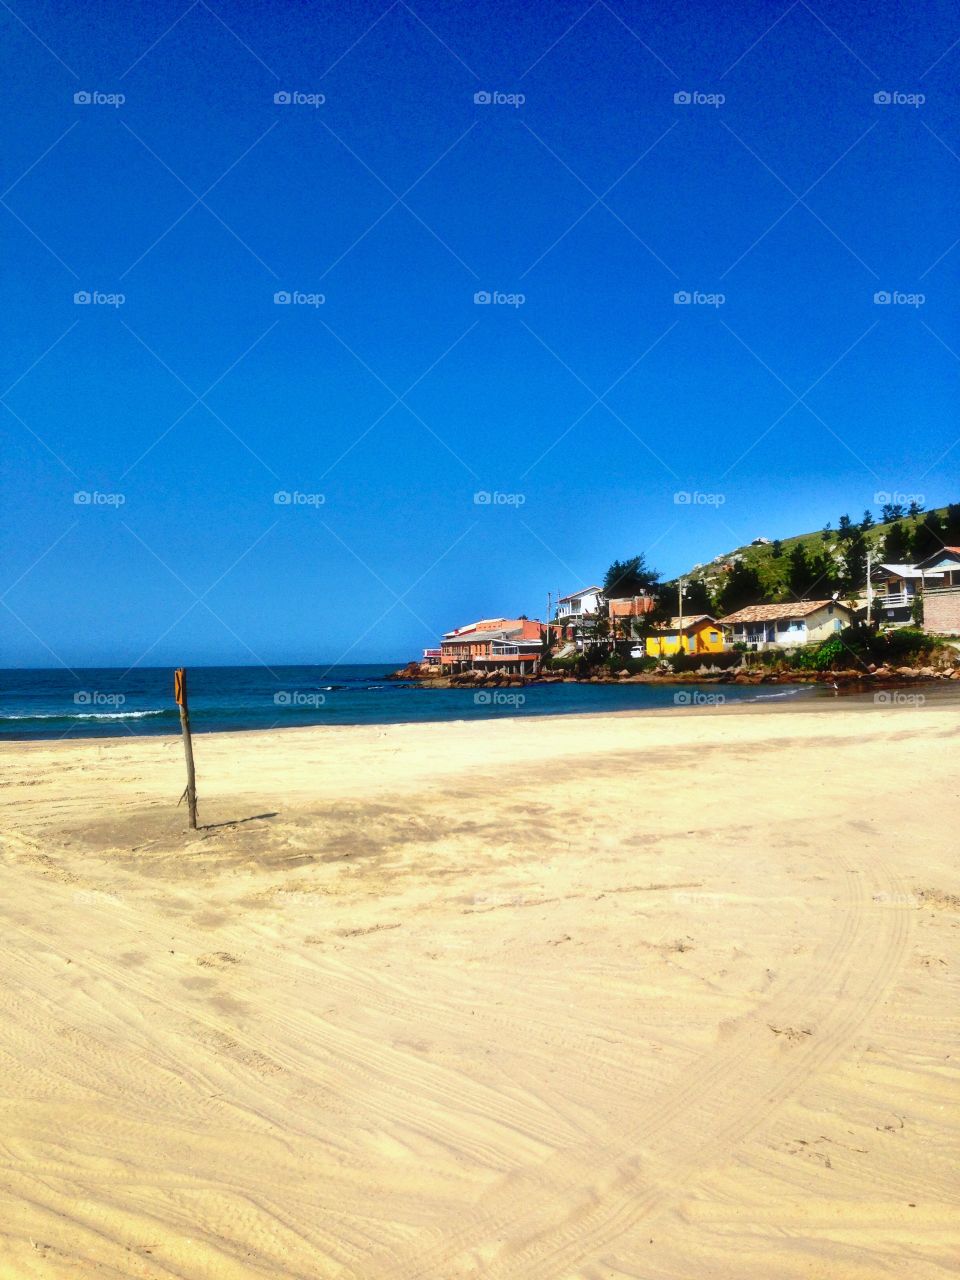 Brazillian beach. This beach is located in Santa Catarina, it's called Galheta beach.